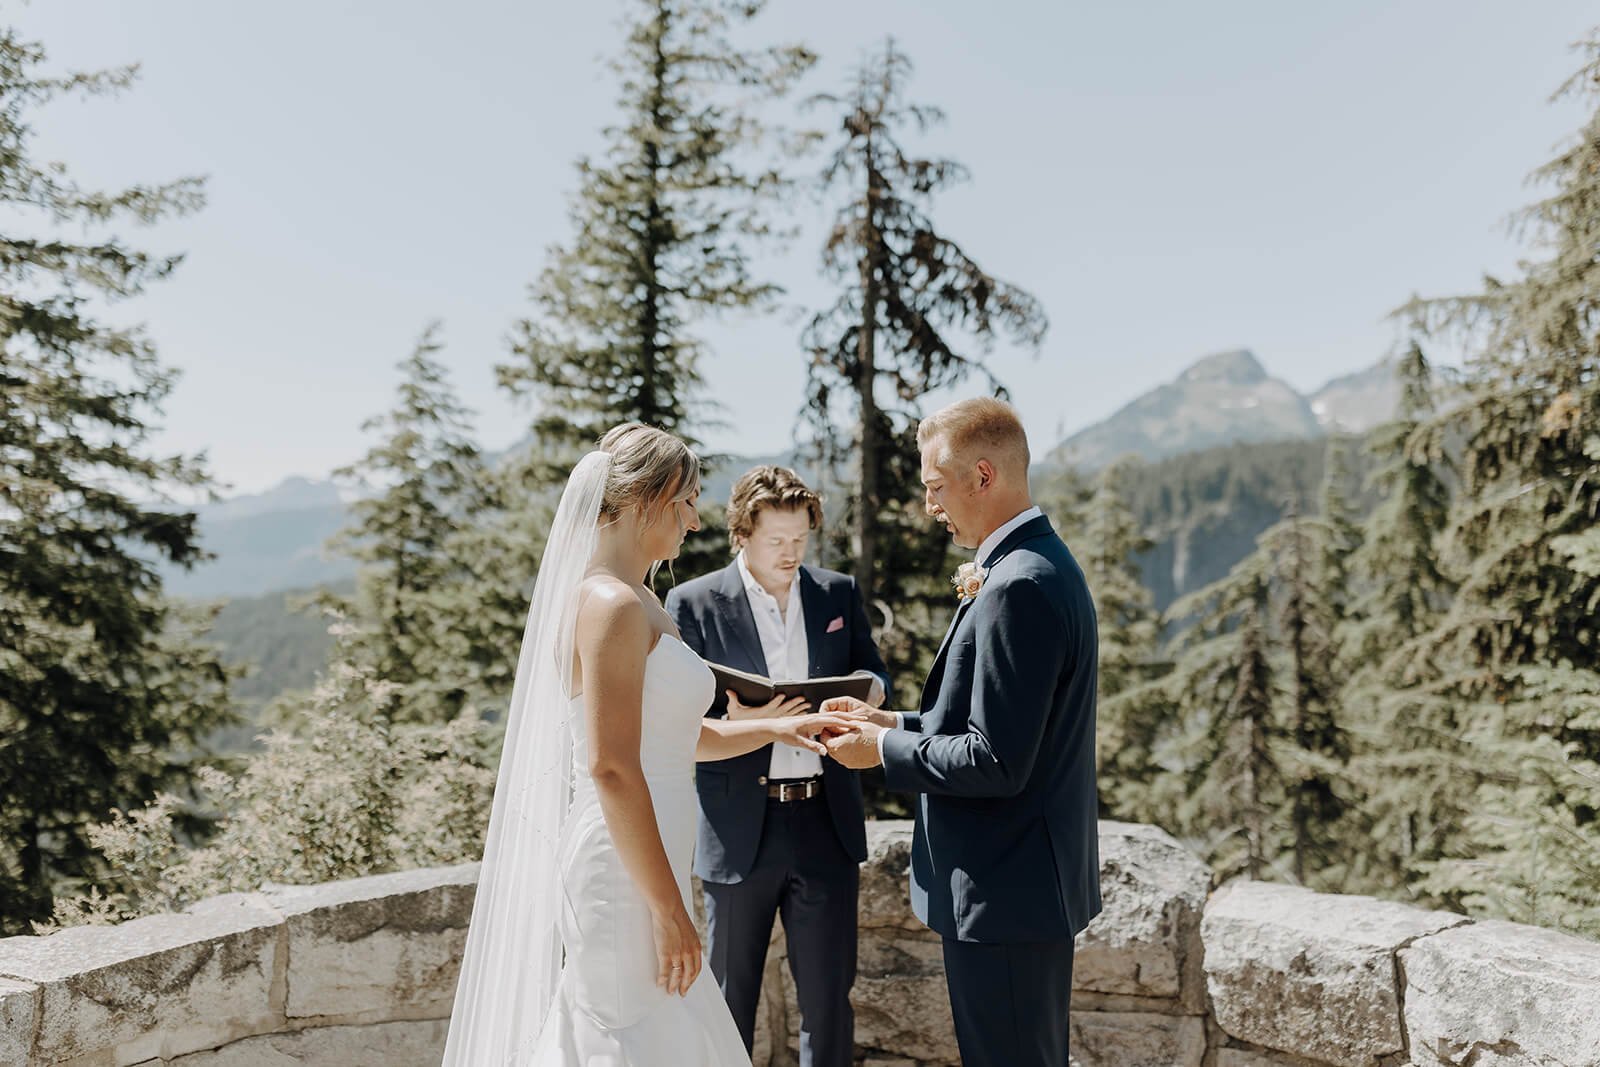 Bride and groom exchange rings during Mount Rainier elopement ceremony